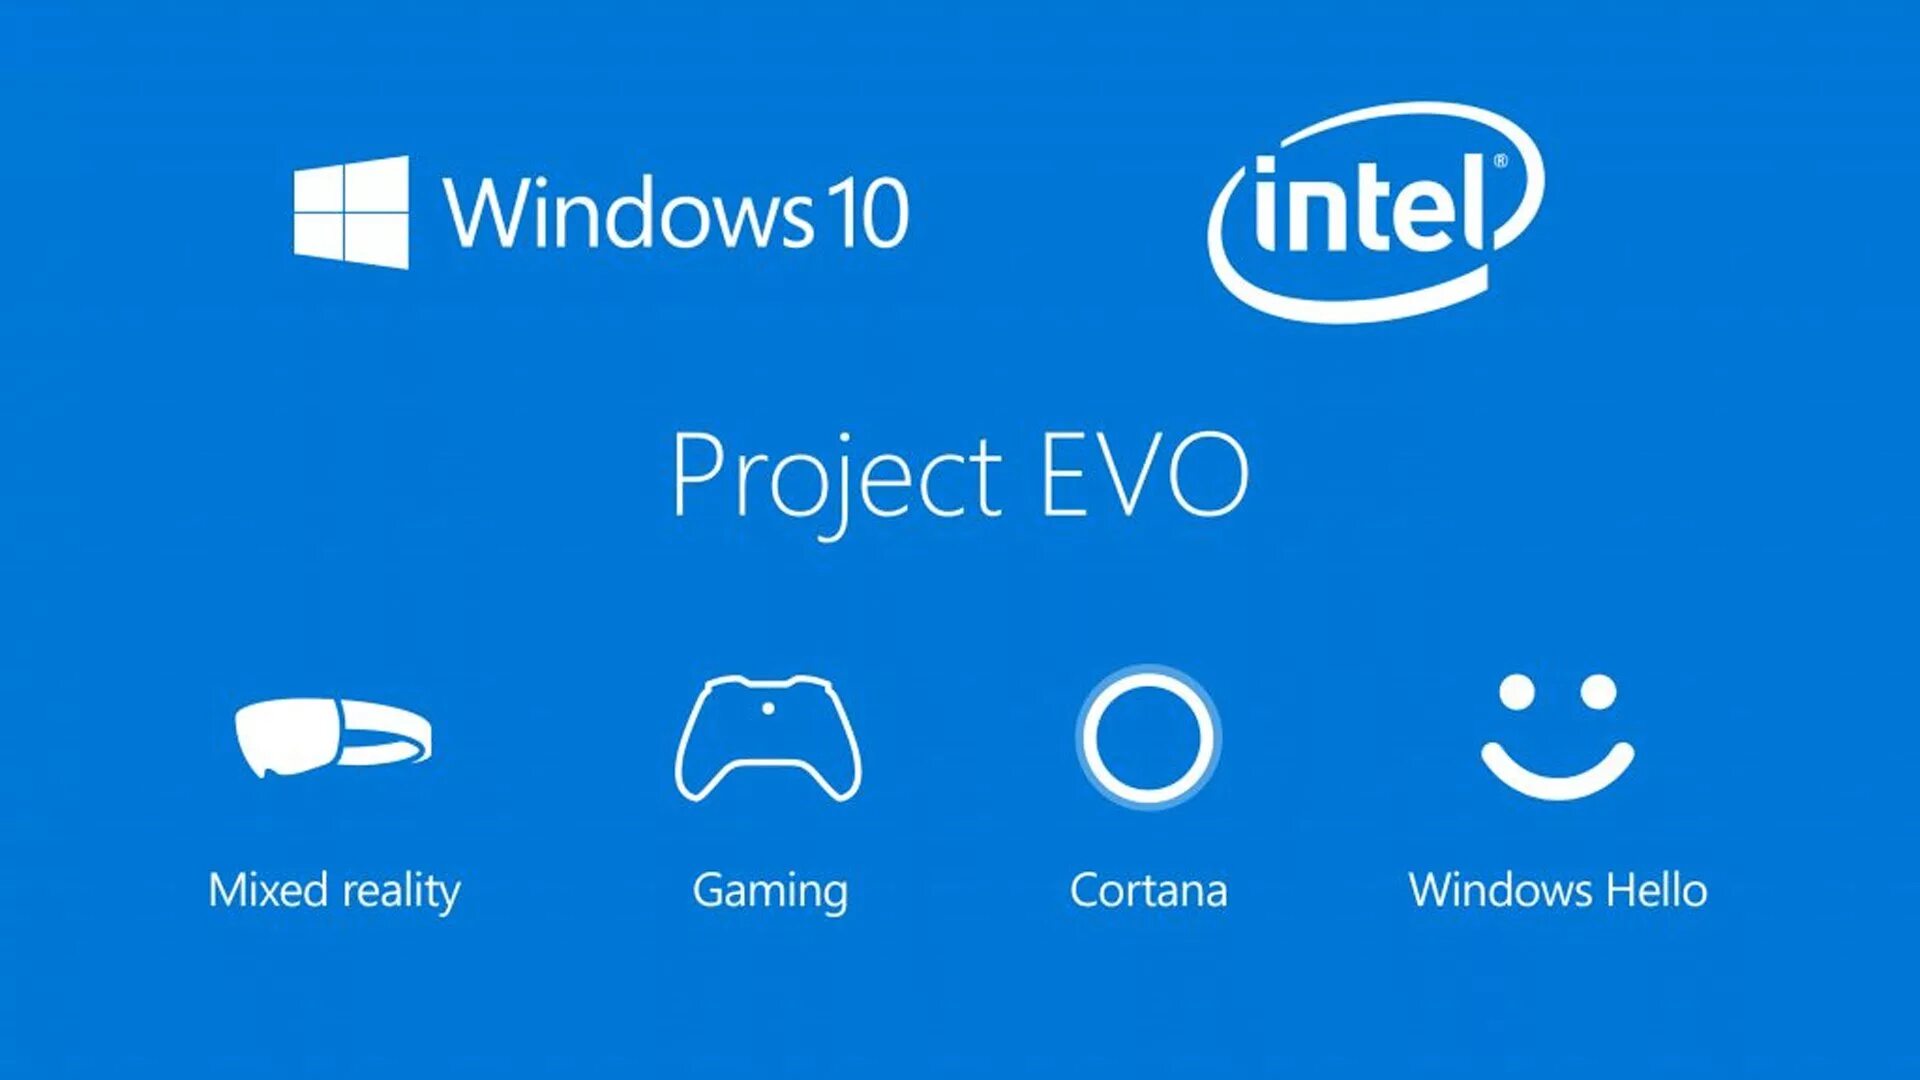 Project EVO. Windows Project. Intel Microsoft. Project EVO image.